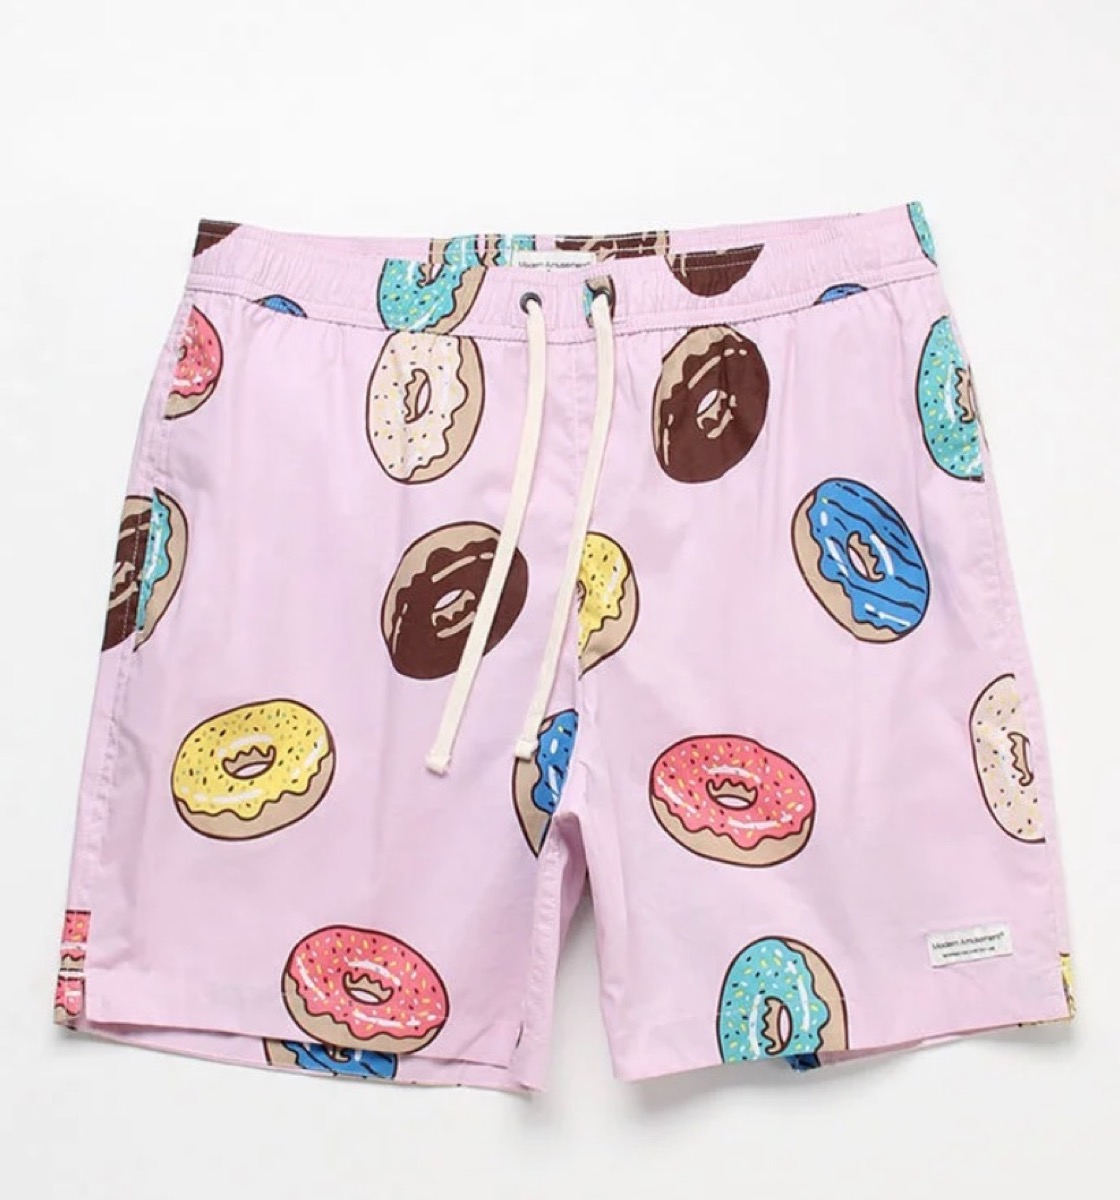 donut trunks, cheap swimsuits